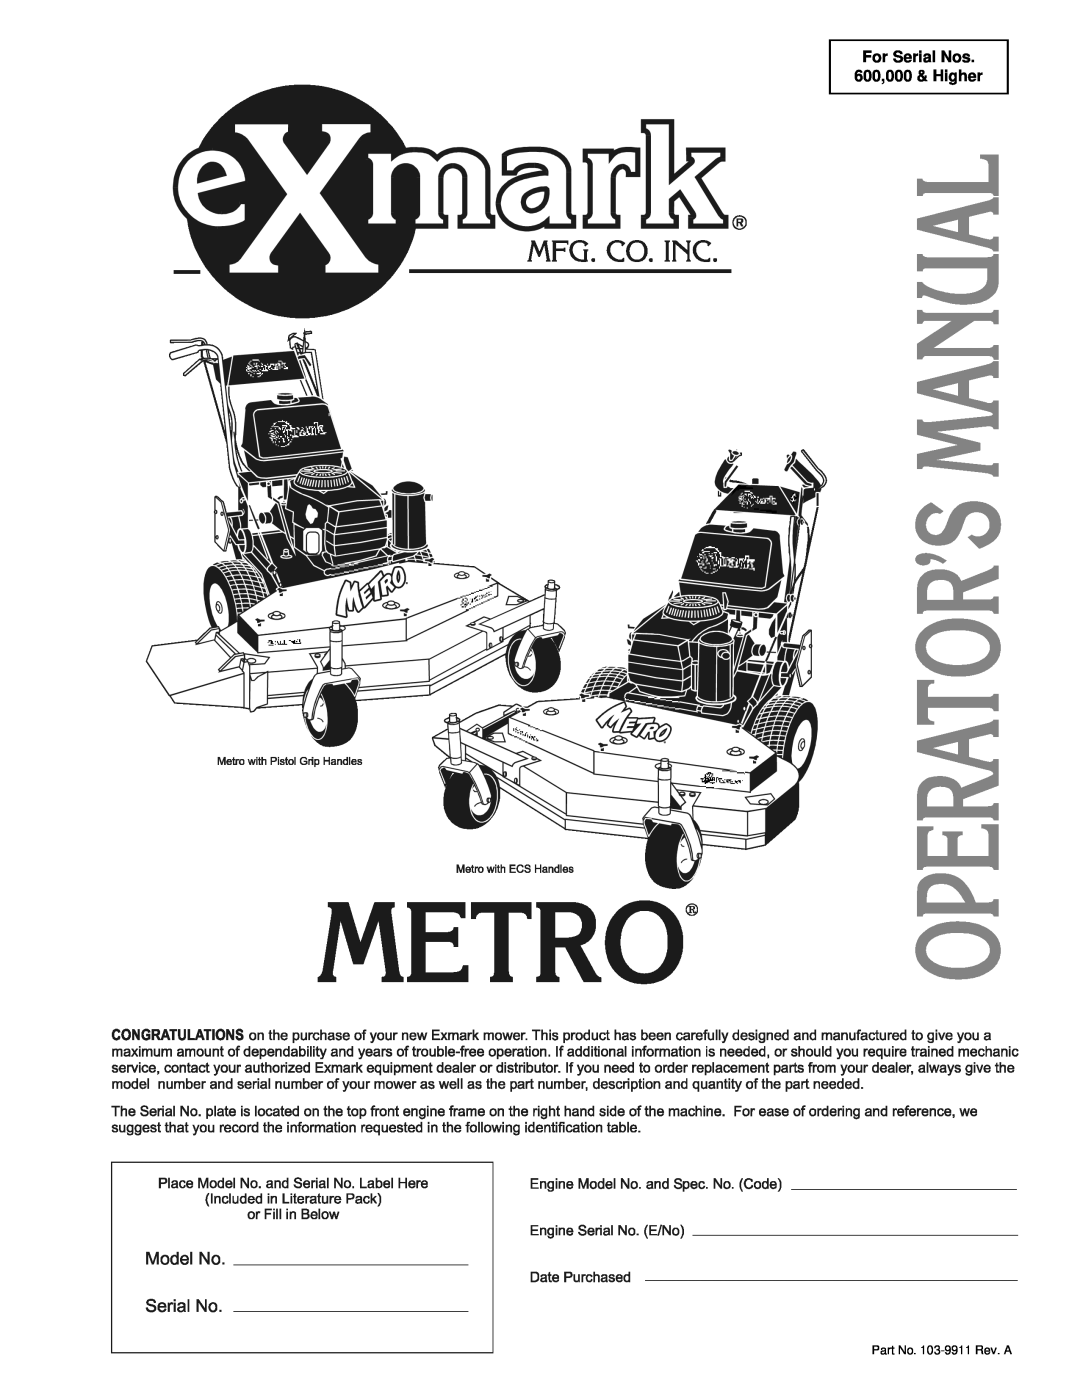 Exmark Lazer ZXS manual For Serial Nos 600,000 & Higher, Part No. 103-9911 Rev. A 